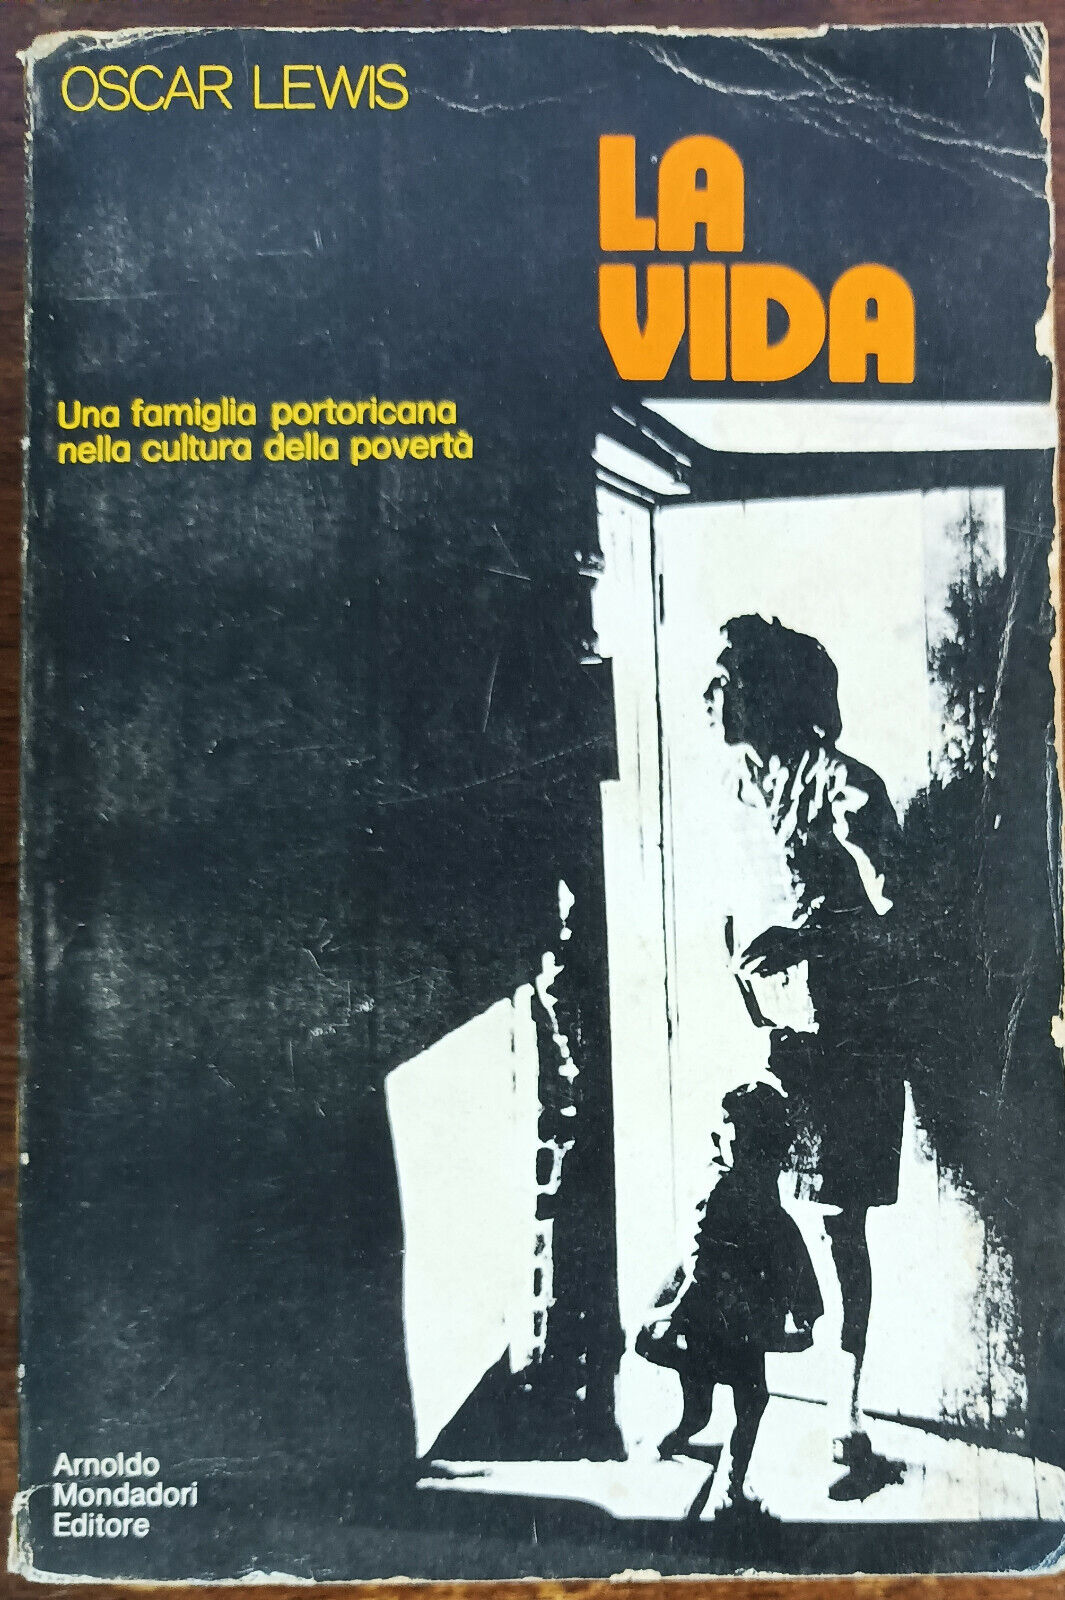 La vida - Oscar Lewis - Arnolo Mondadori, 1972 - A